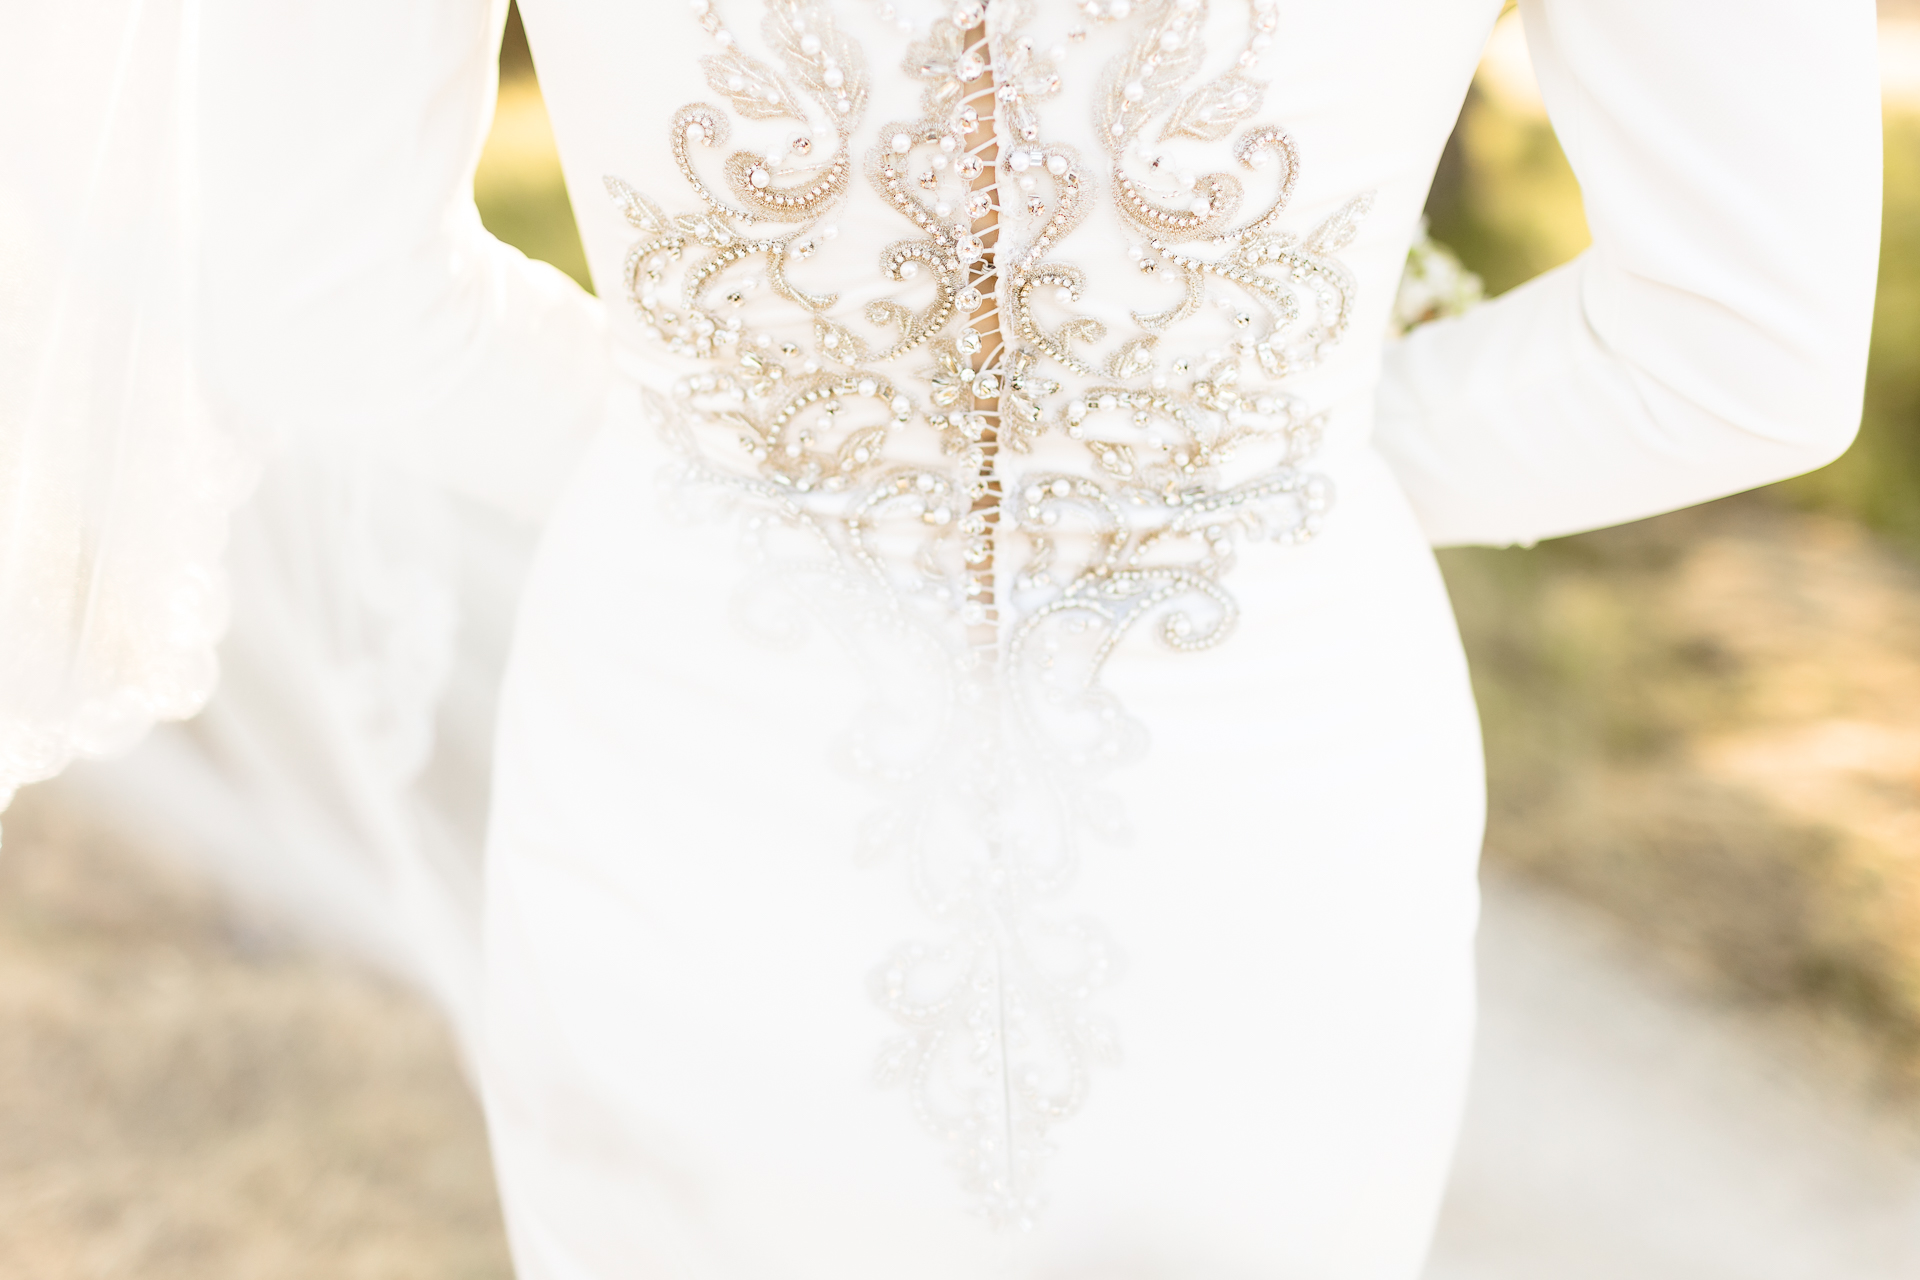 Gesinee's bridal wedding gown details